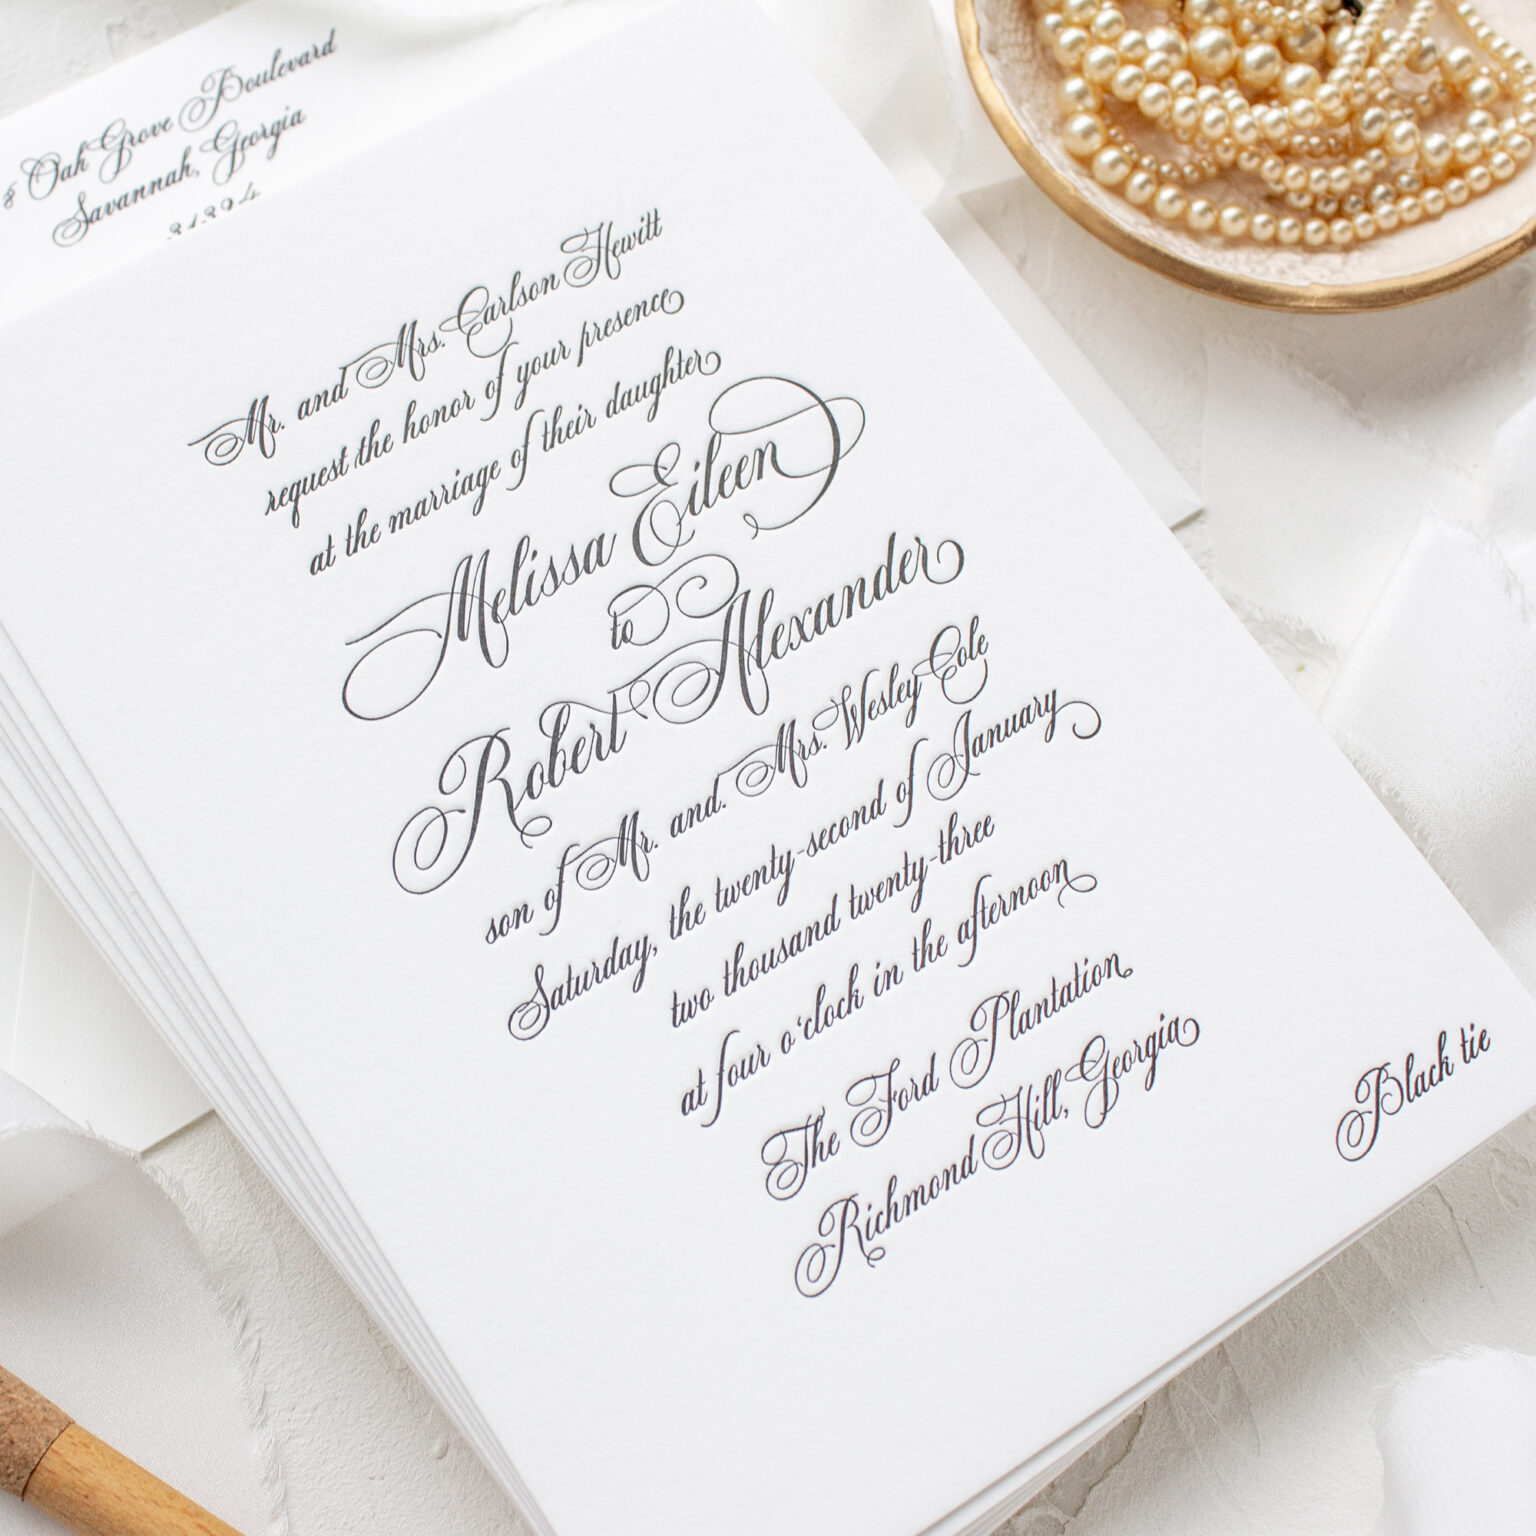 Wedding Stationery Guide Wedding Invitation Wording Samples Banter